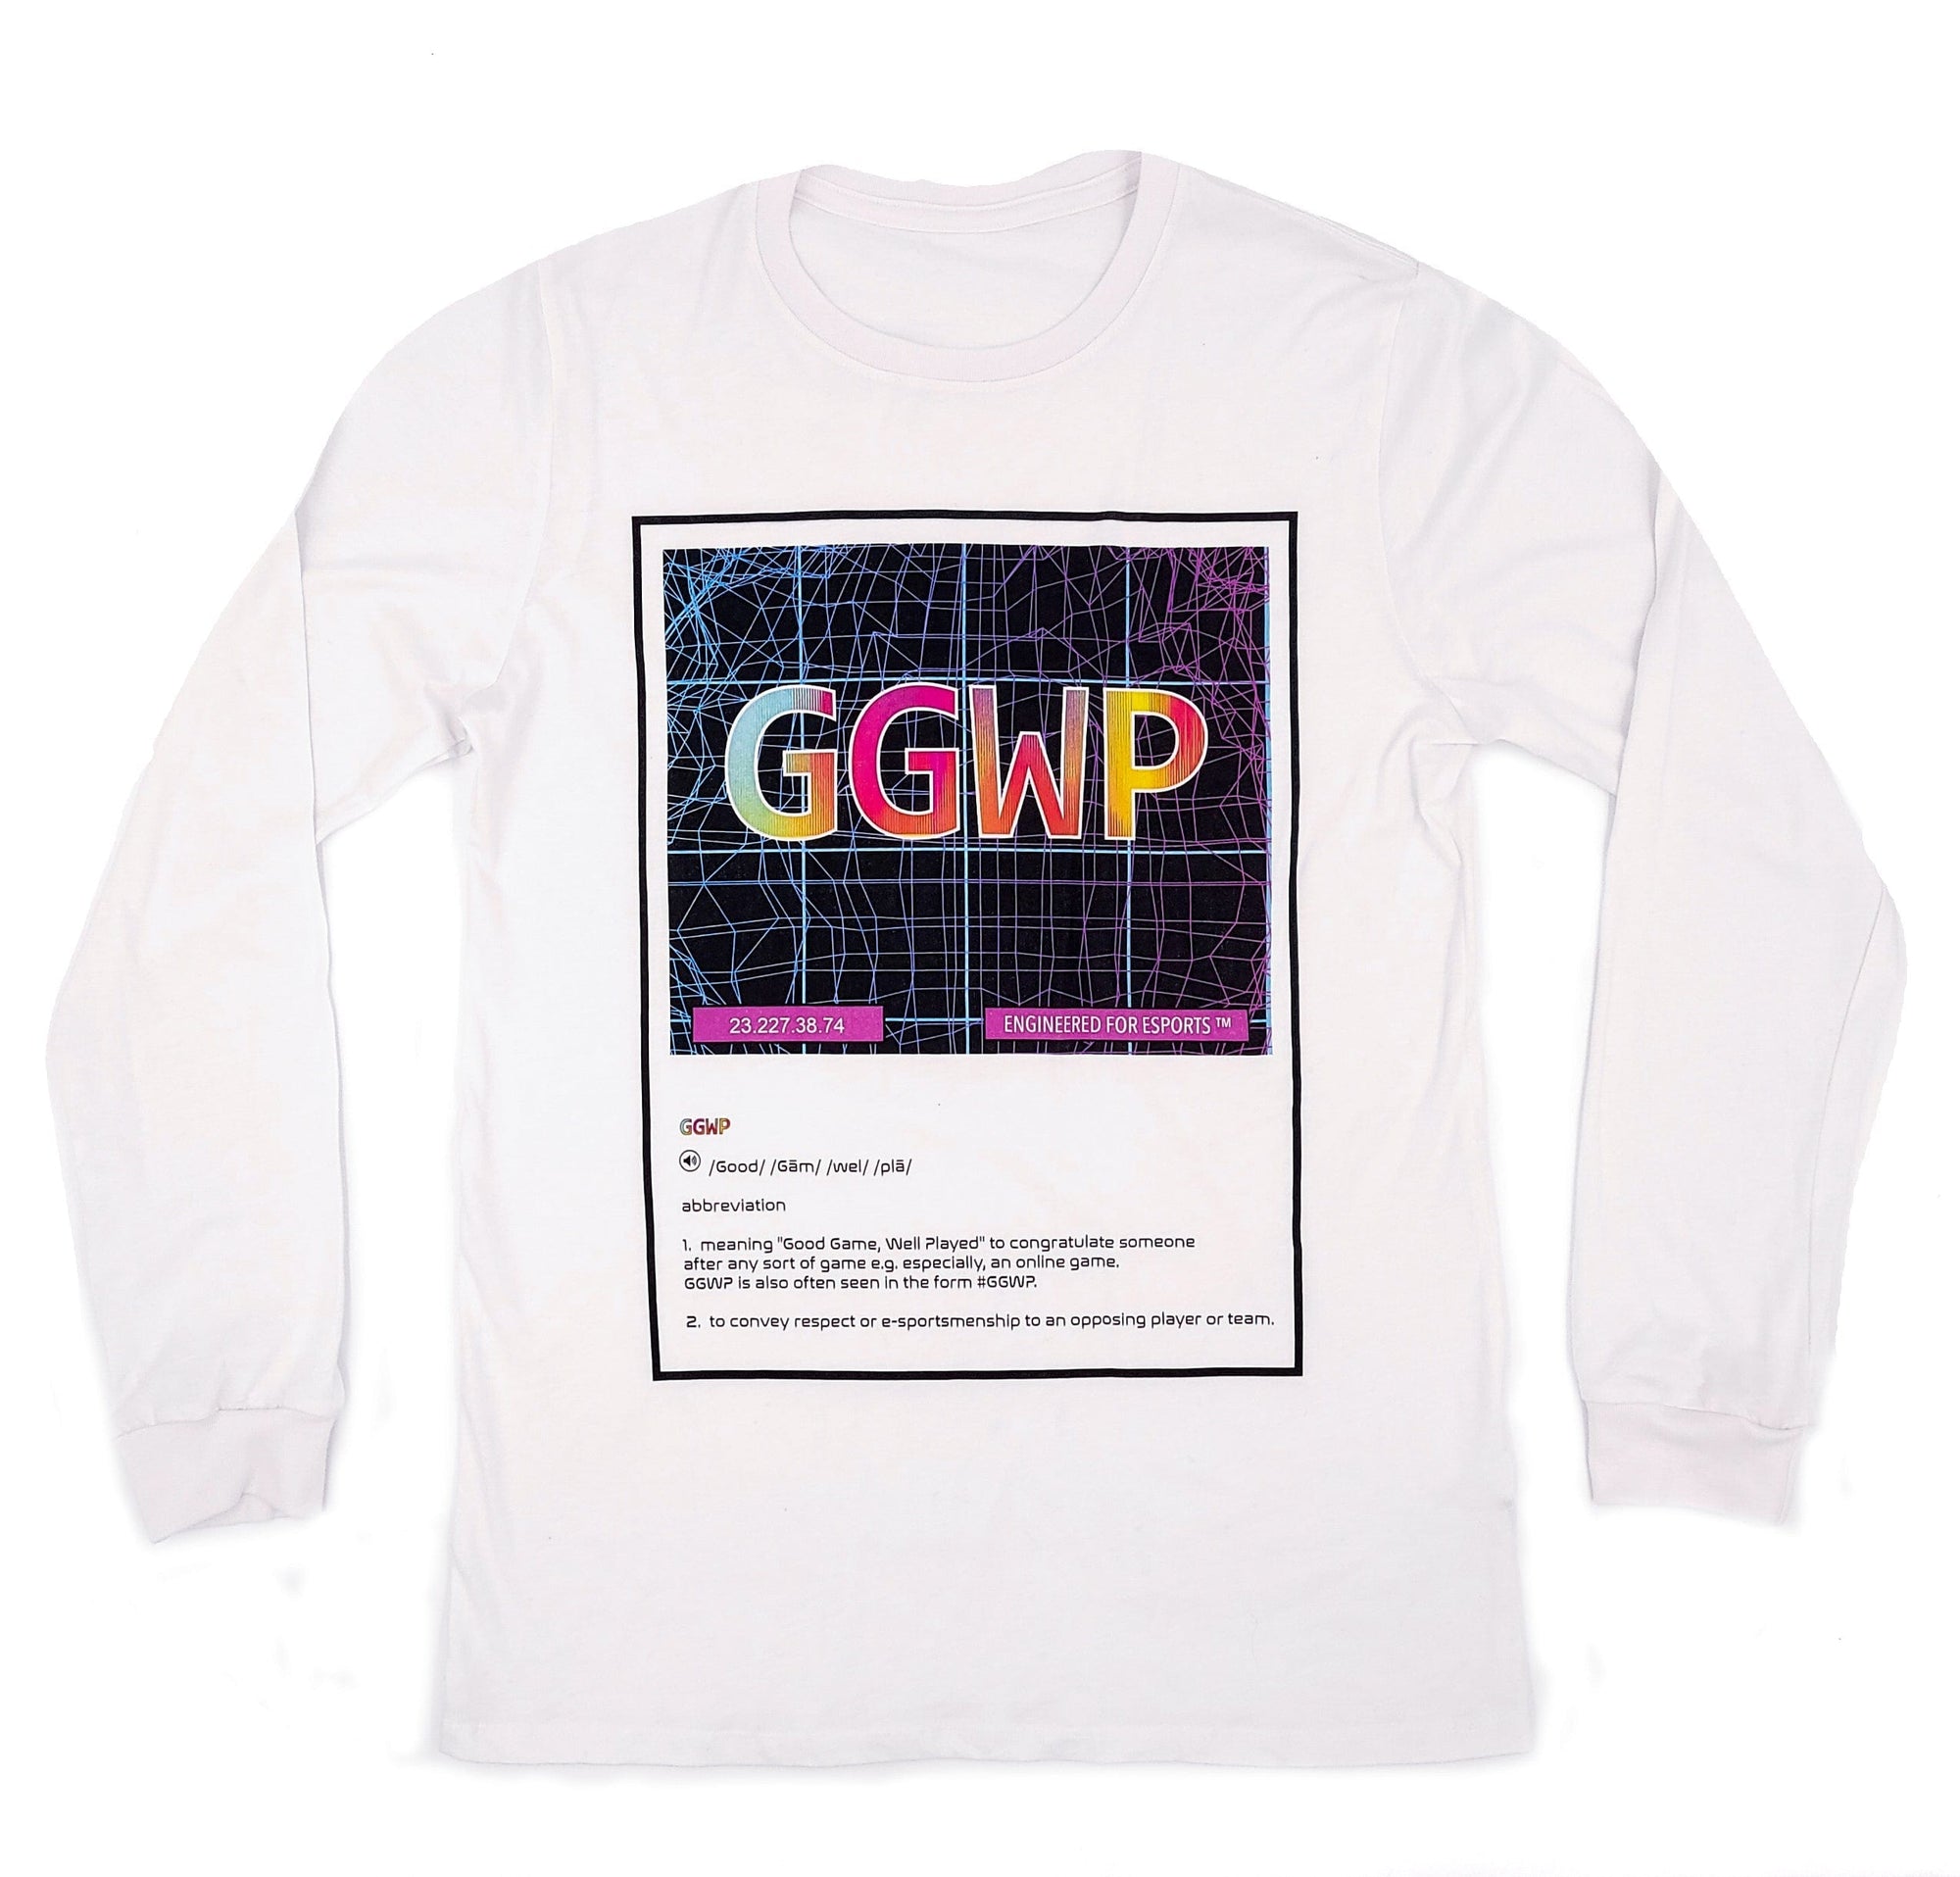 LoL ggwp Surrender Men's Premium T-Shirt